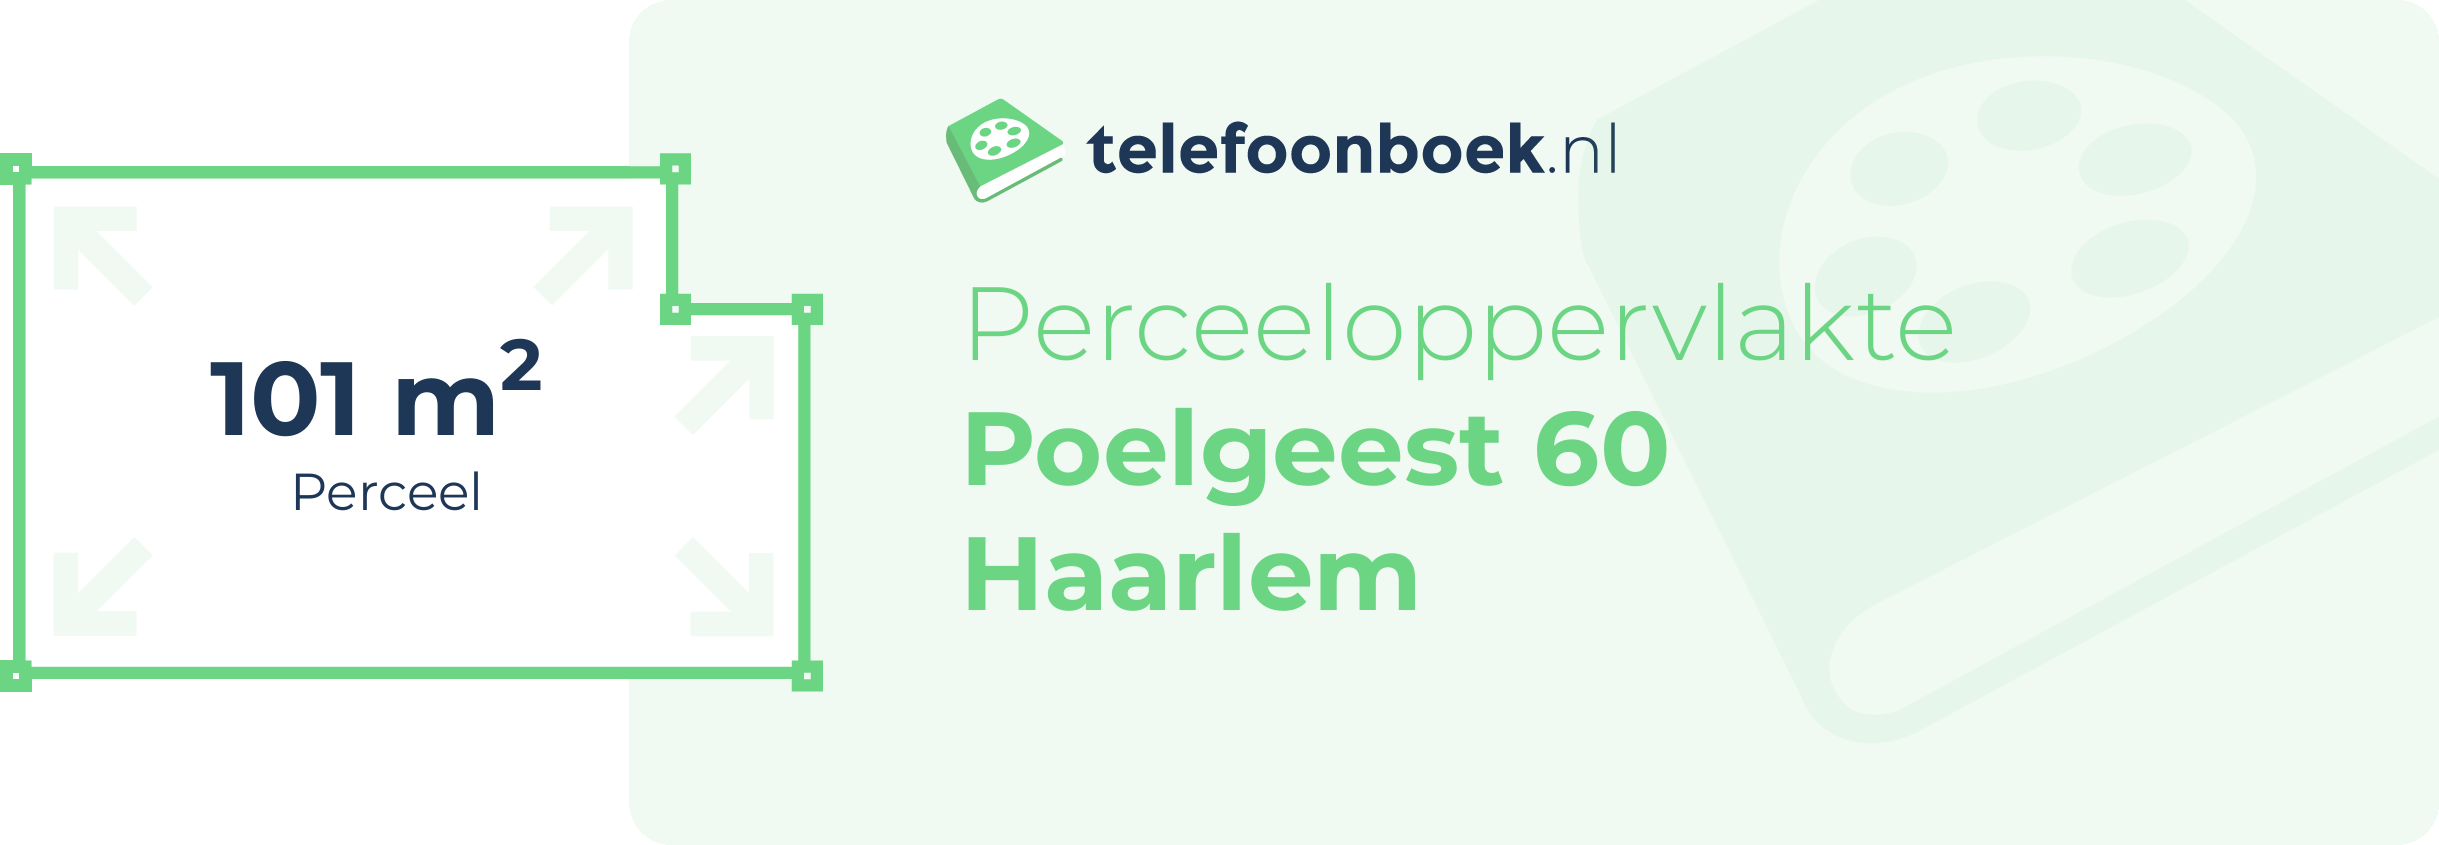 Perceeloppervlakte Poelgeest 60 Haarlem